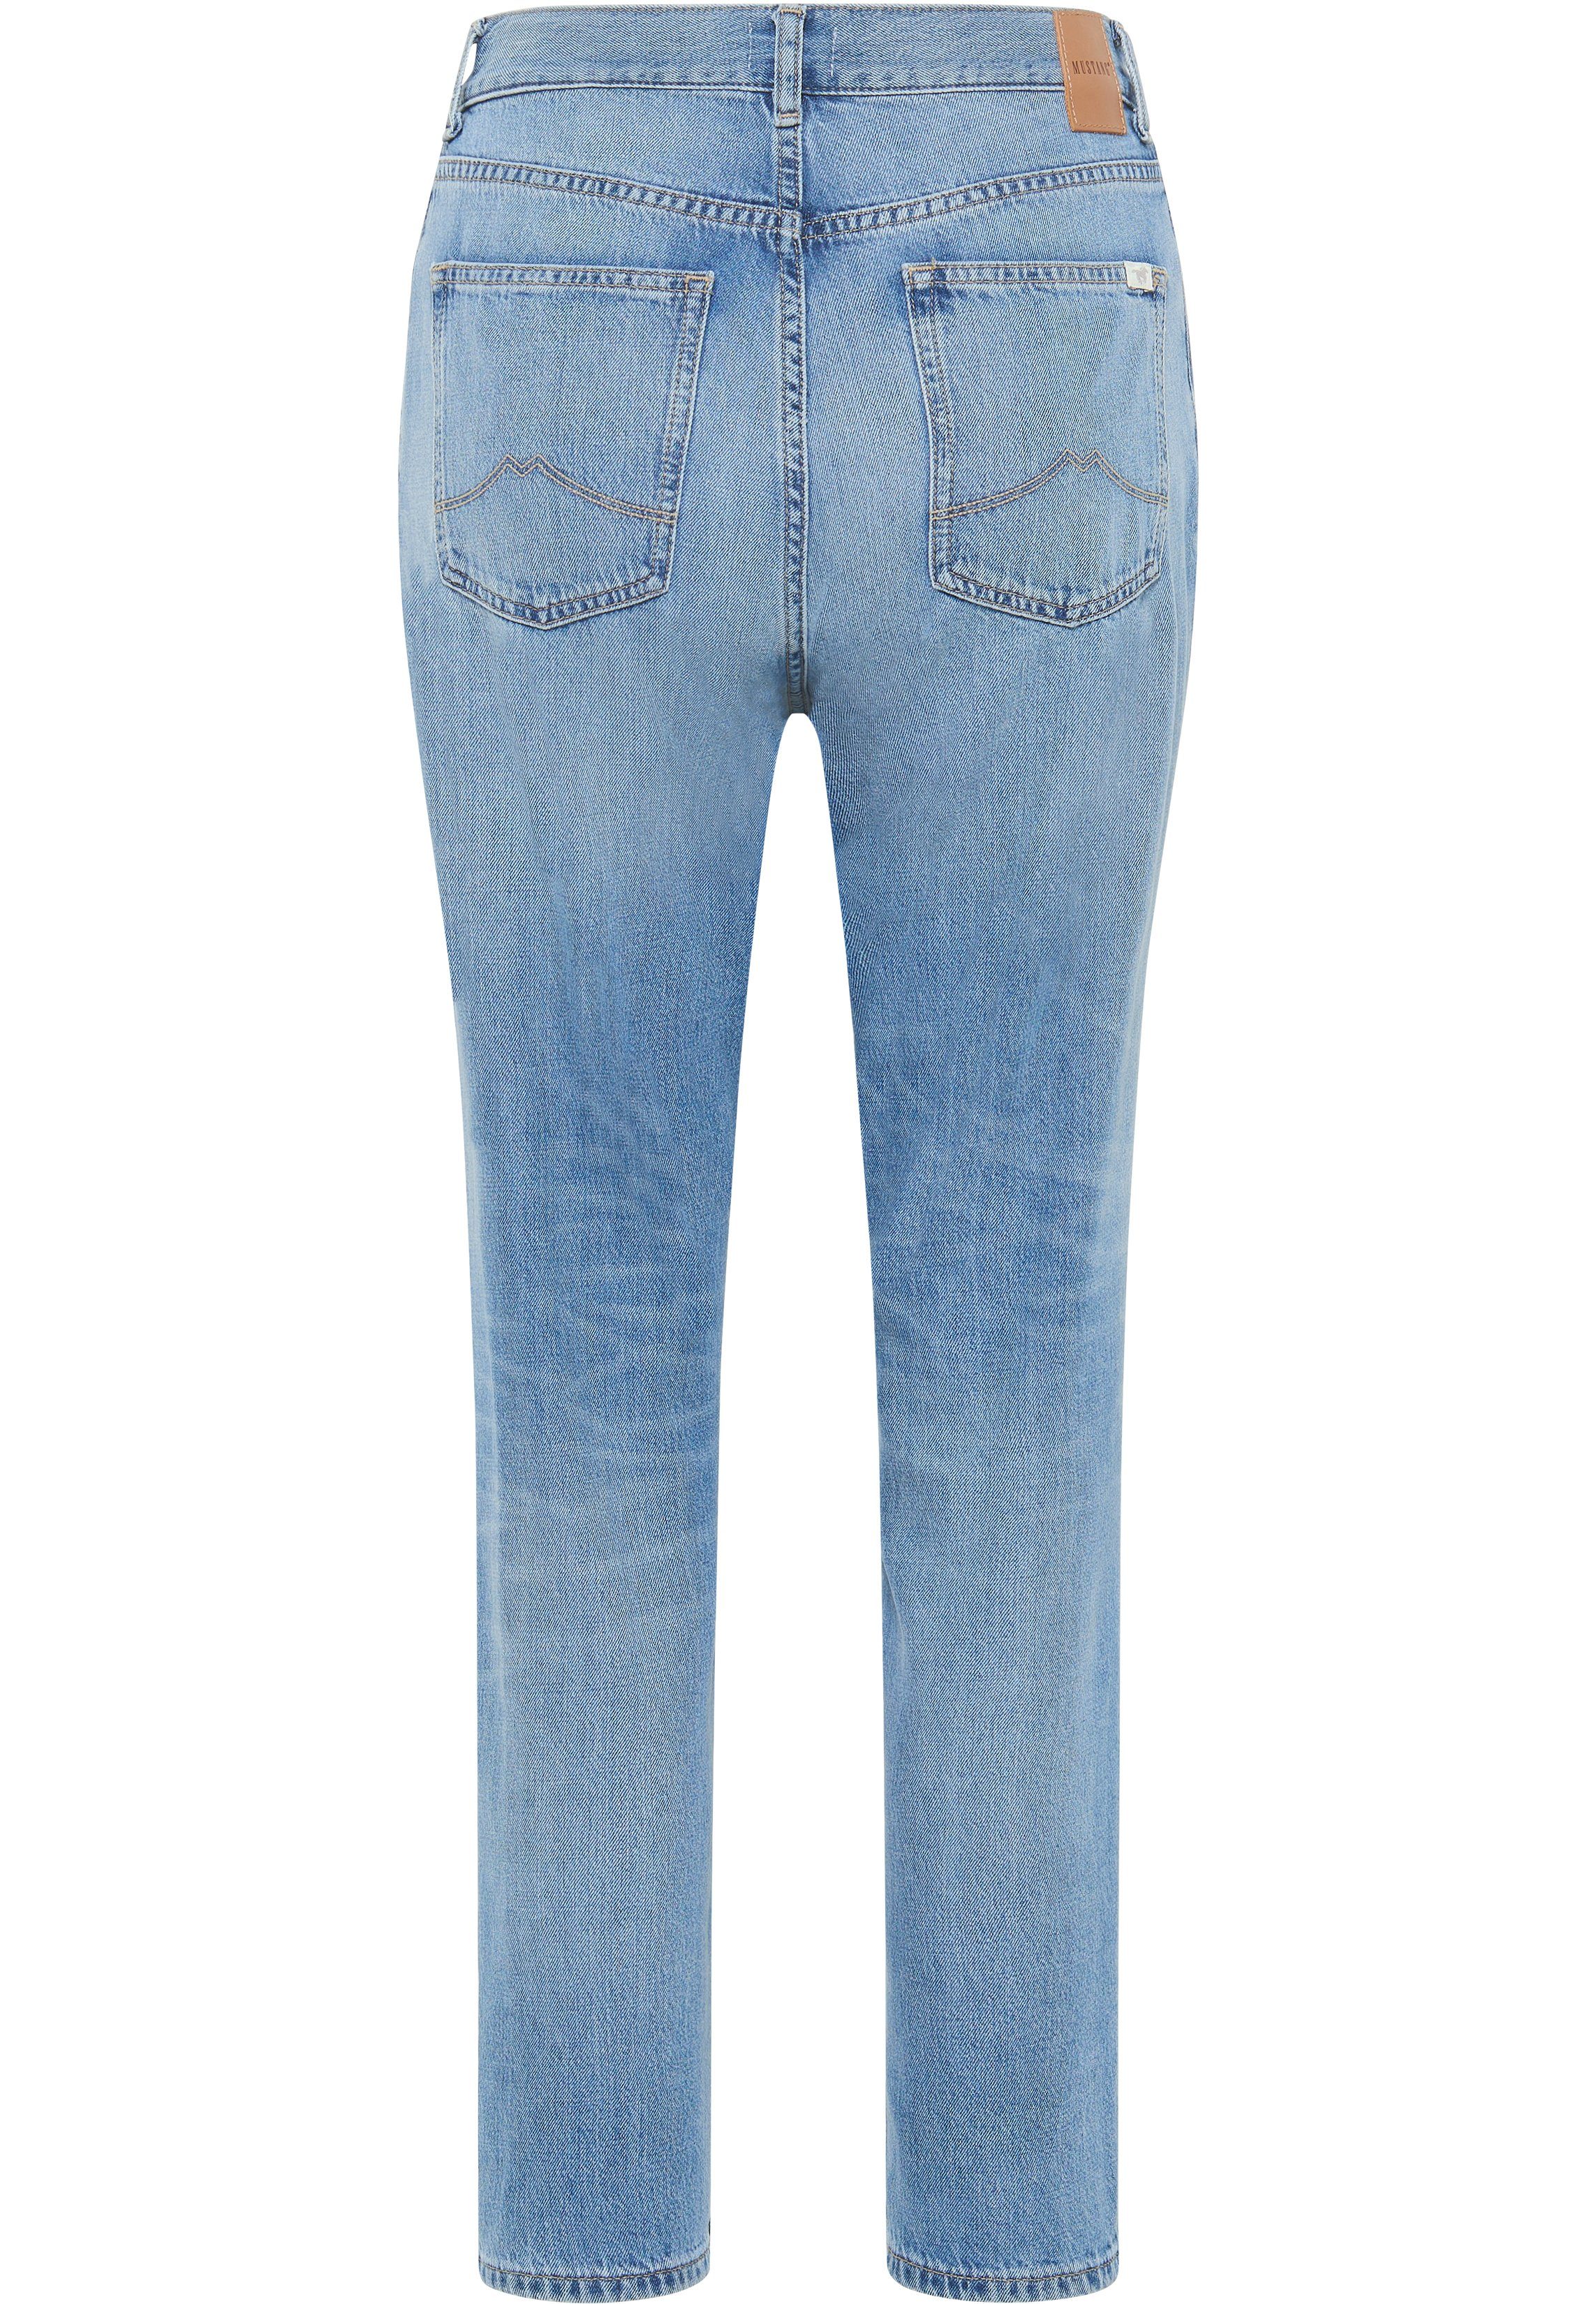 MUSTANG 5-Pocket-Jeans Slim Relaxed Style hellblau-5000413 Brooks